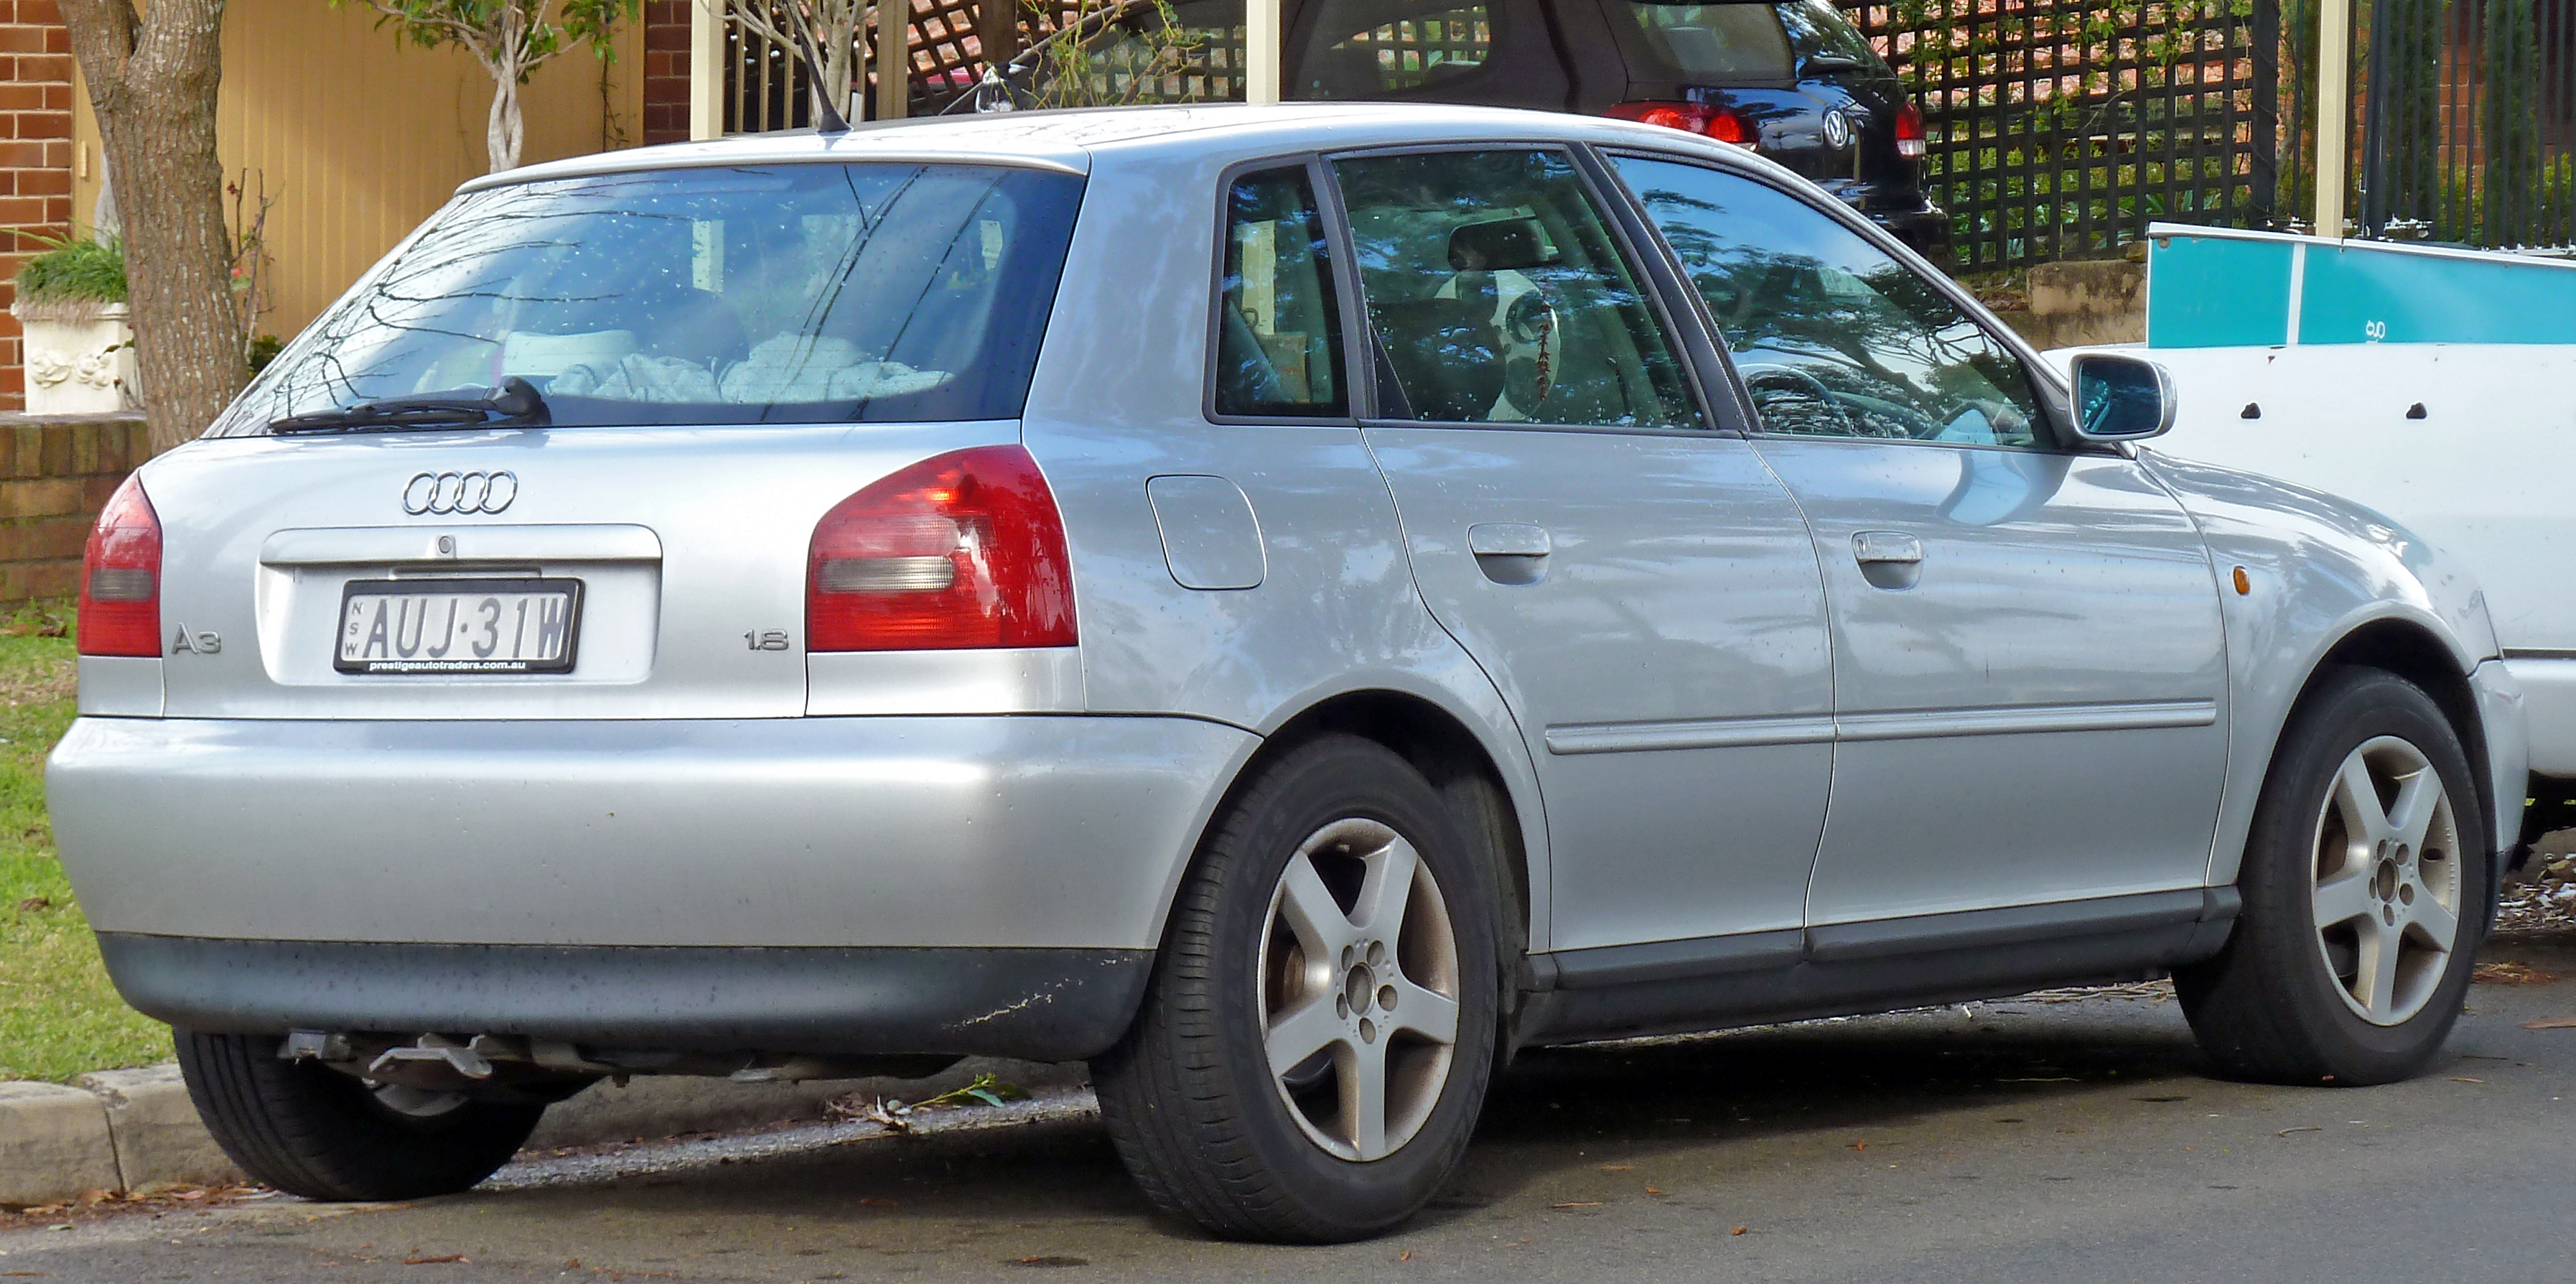 https://upload.wikimedia.org/wikipedia/commons/3/34/1999-2000_Audi_A3_%288L%29_1.8_5-door_hatchback_01.jpg